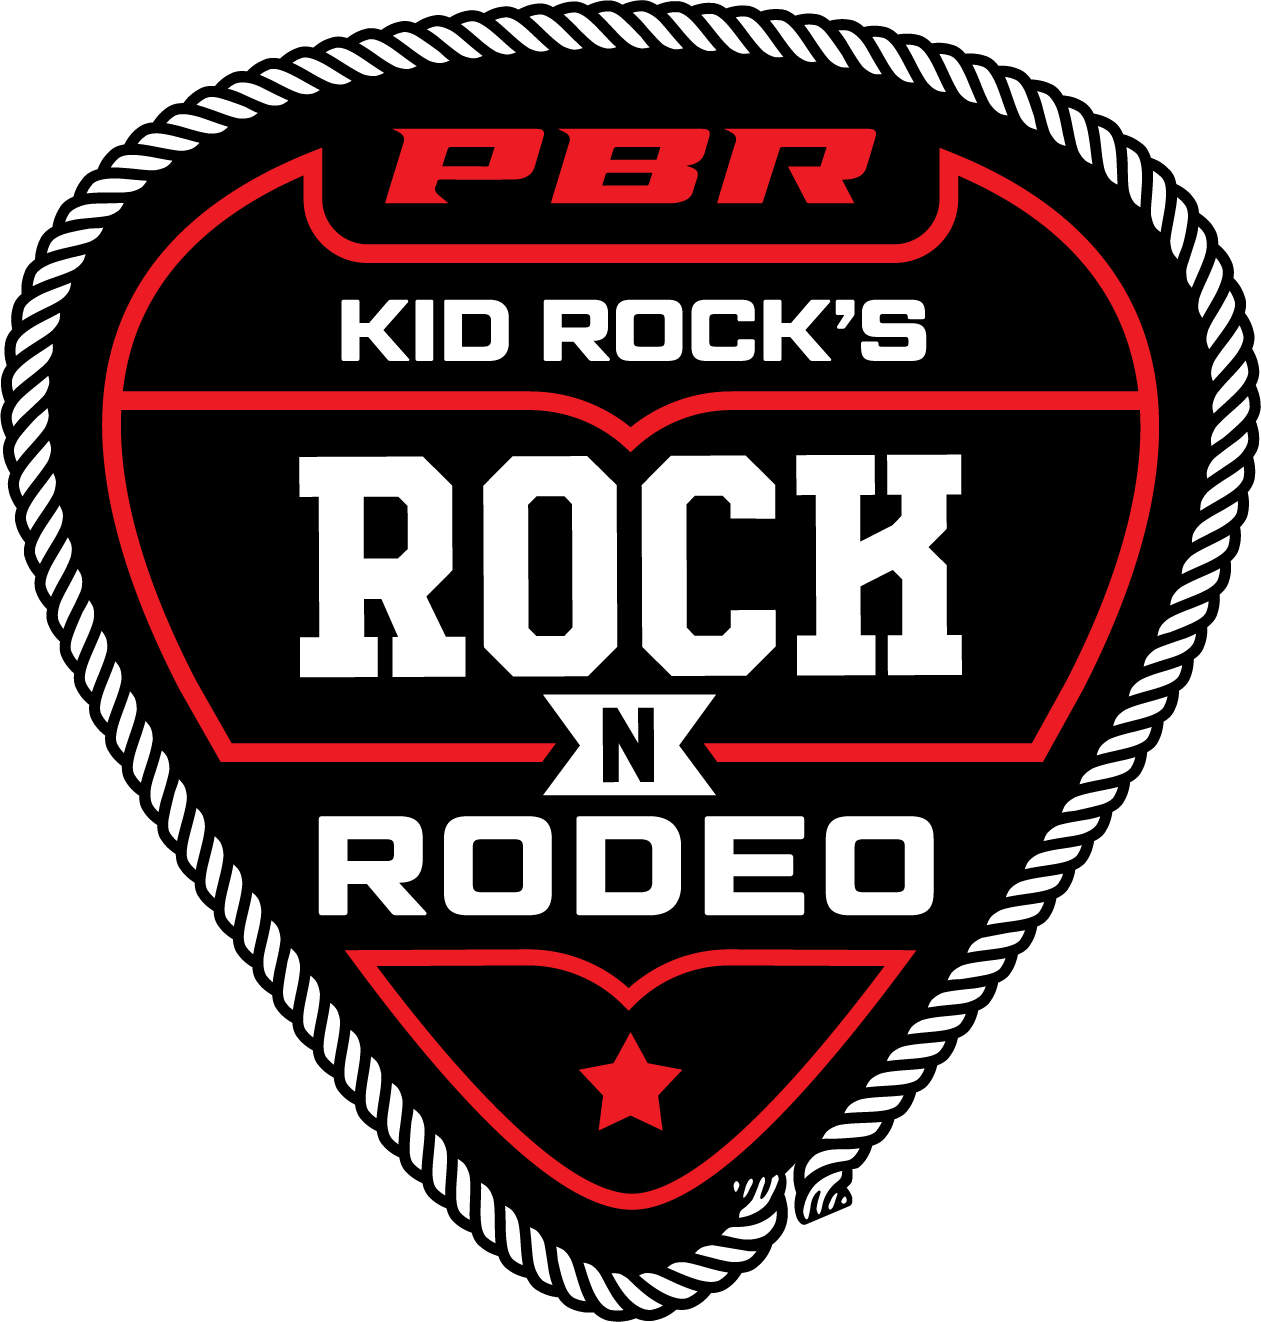 Kid Rock's Rock N Rodeo